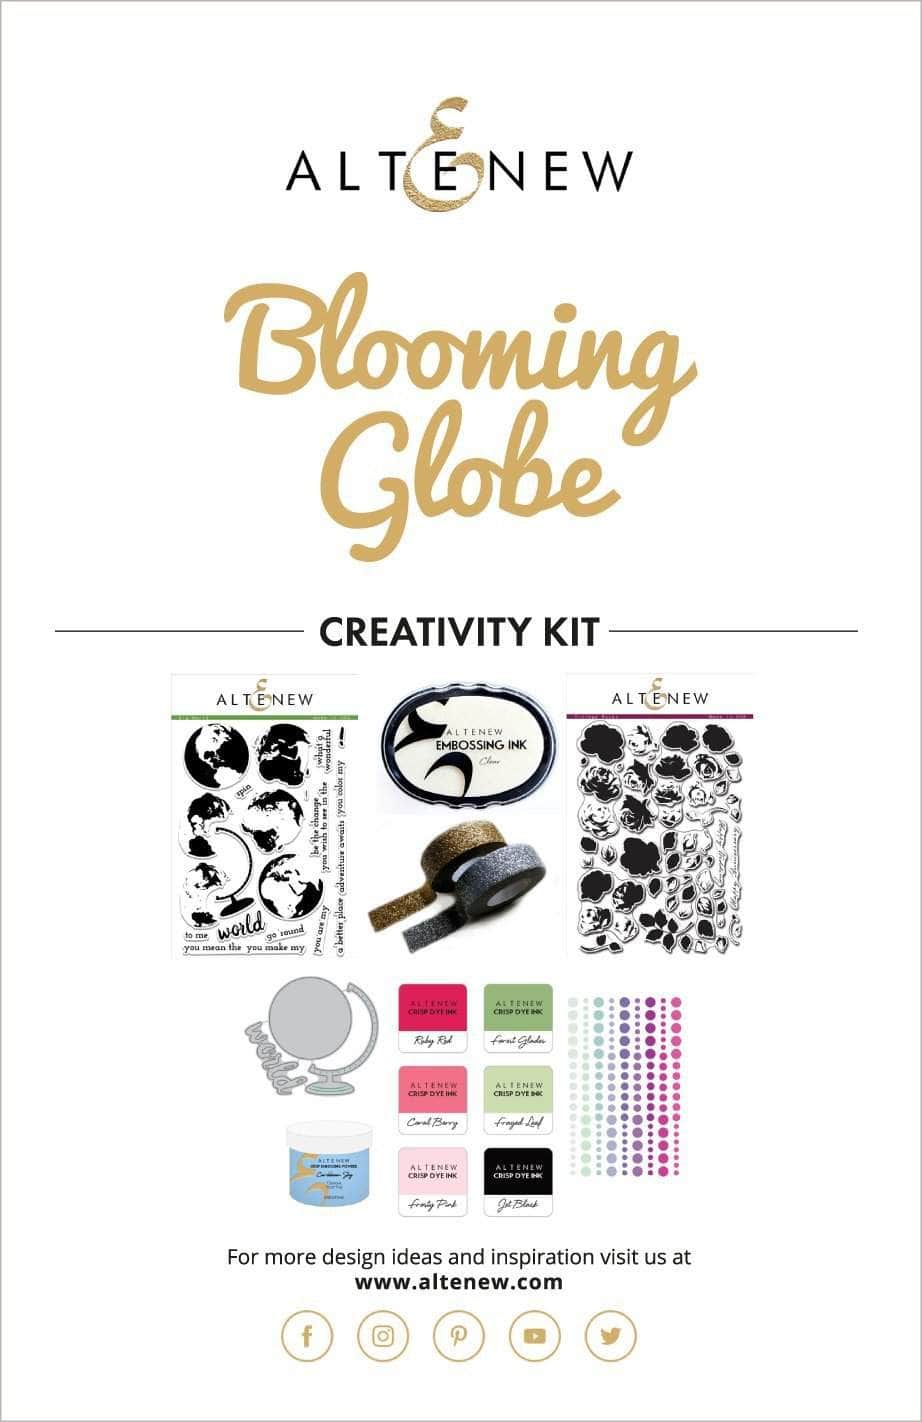 55Printing.com Printed Media Blooming Globe Creativity Kit Inspiration Guide